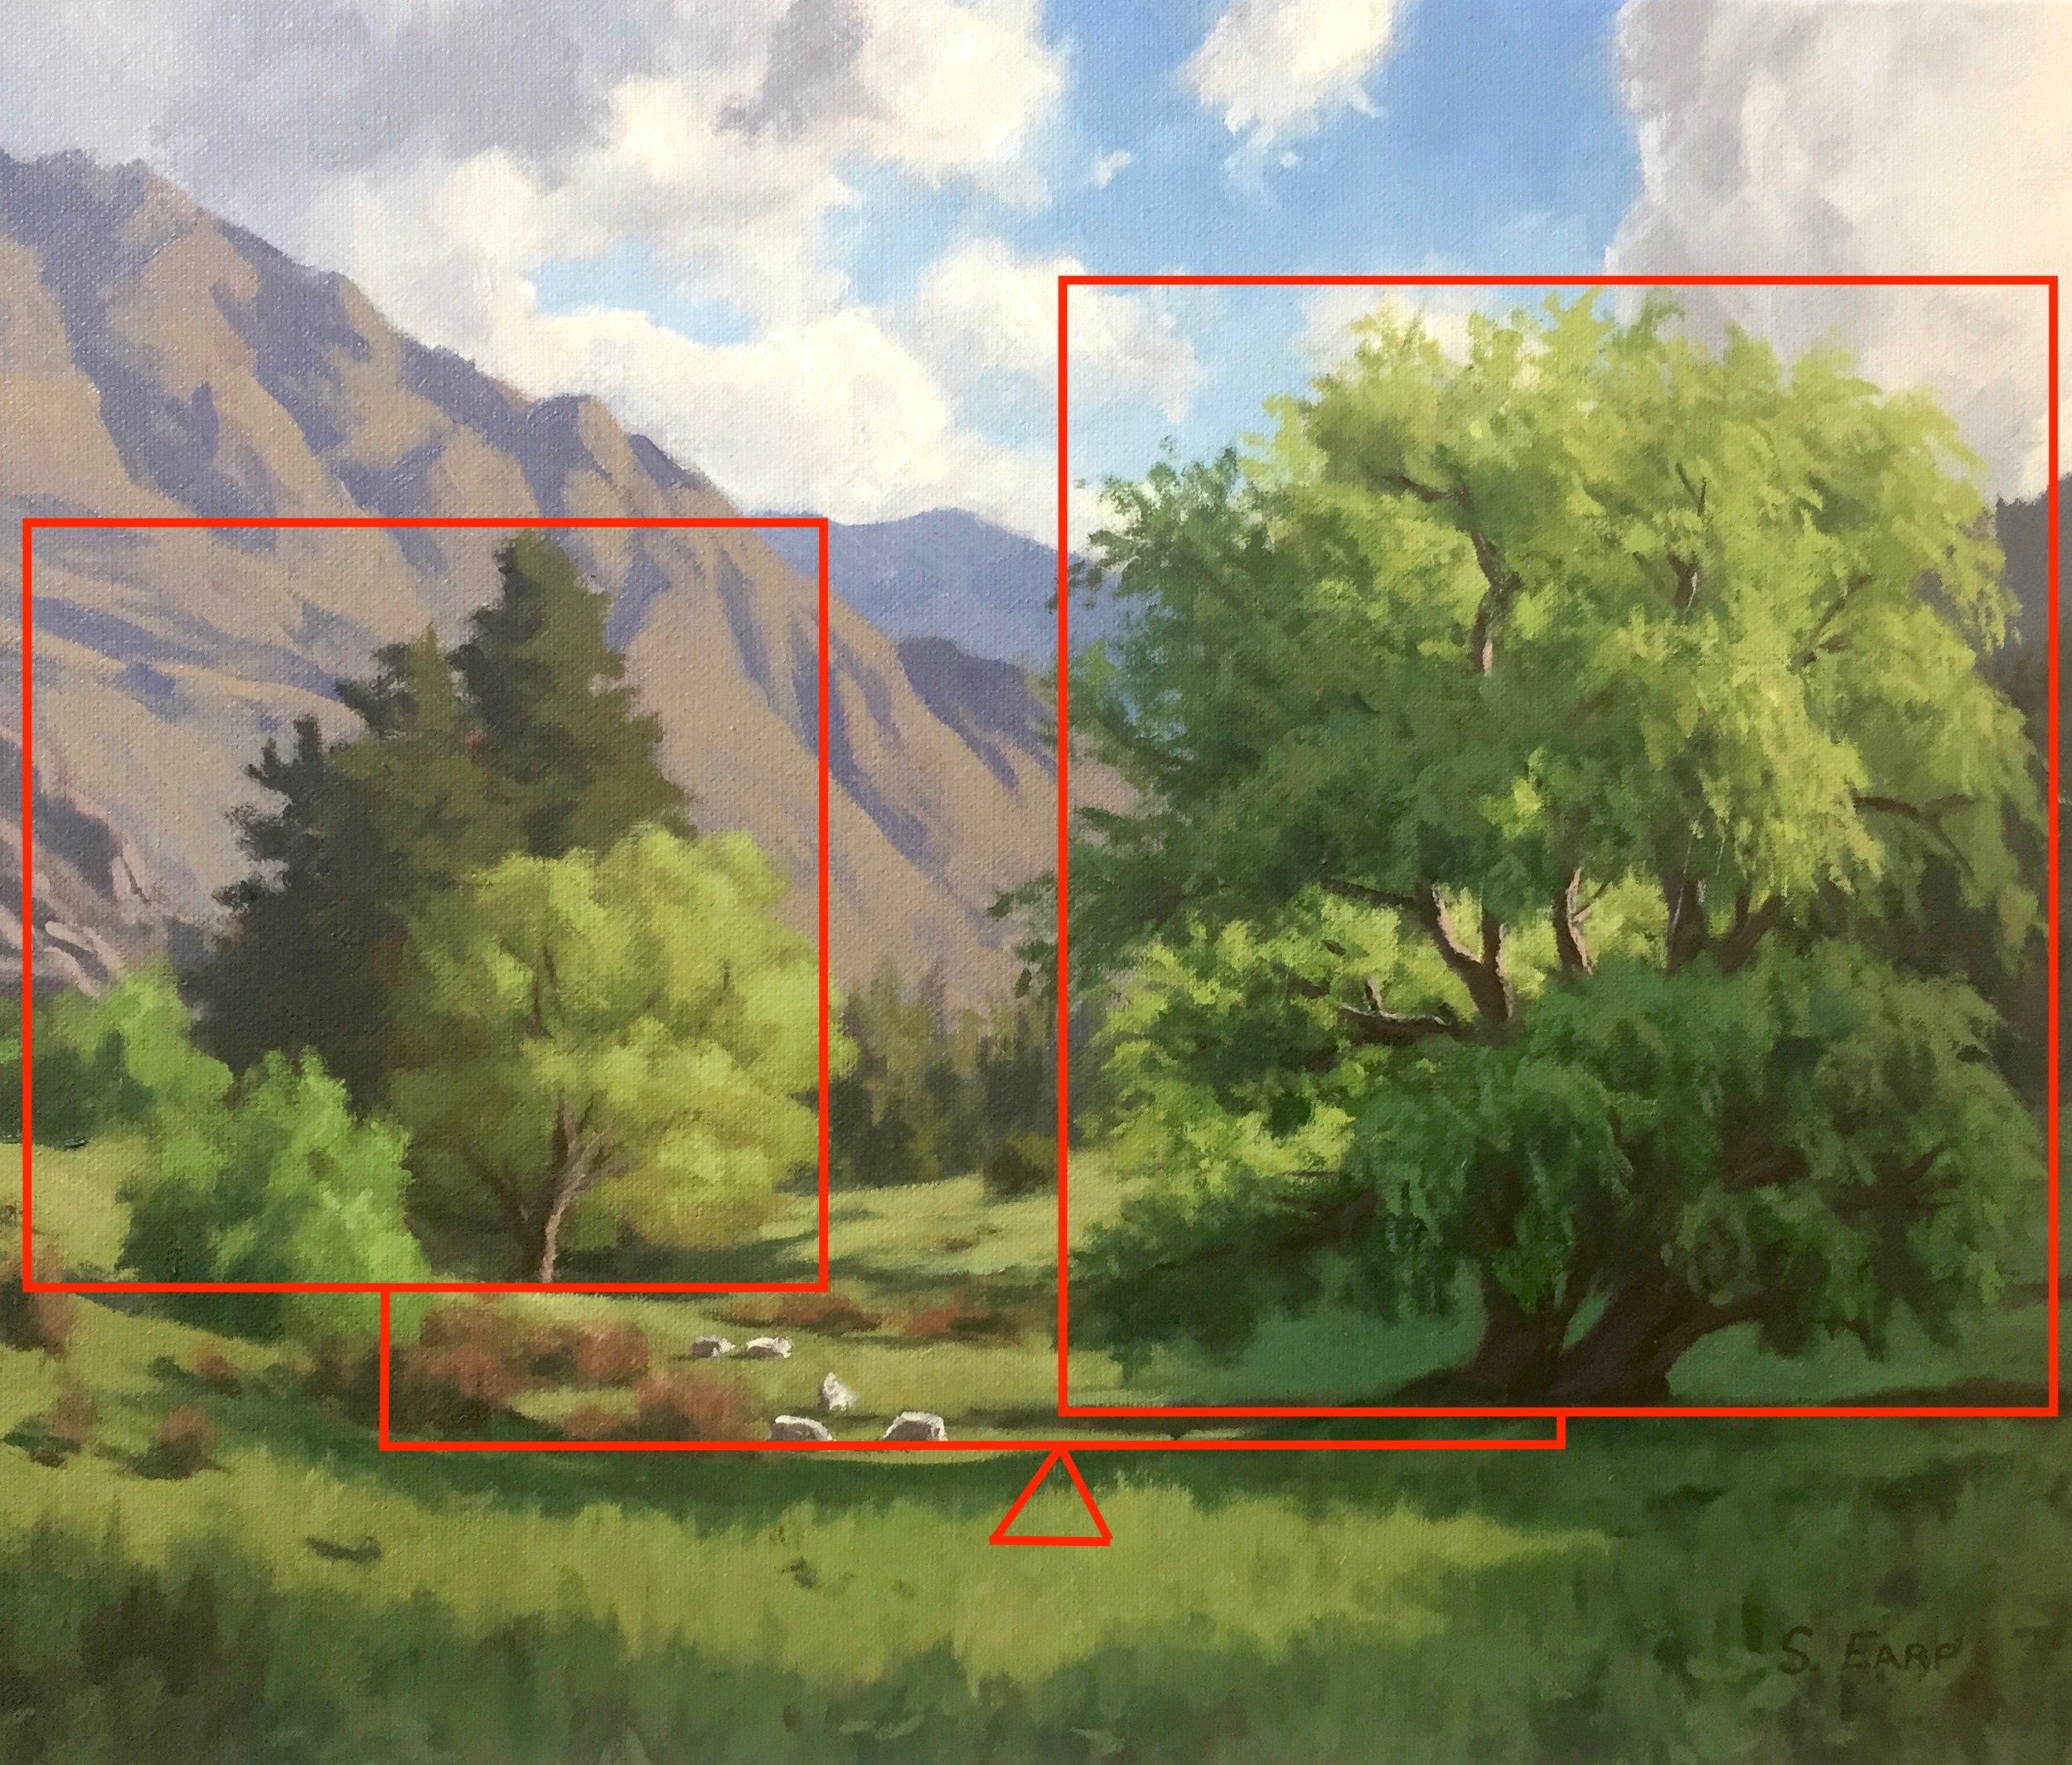 Willow Trees and Light - Samuel Earp - oil painting - composition 3.jpg